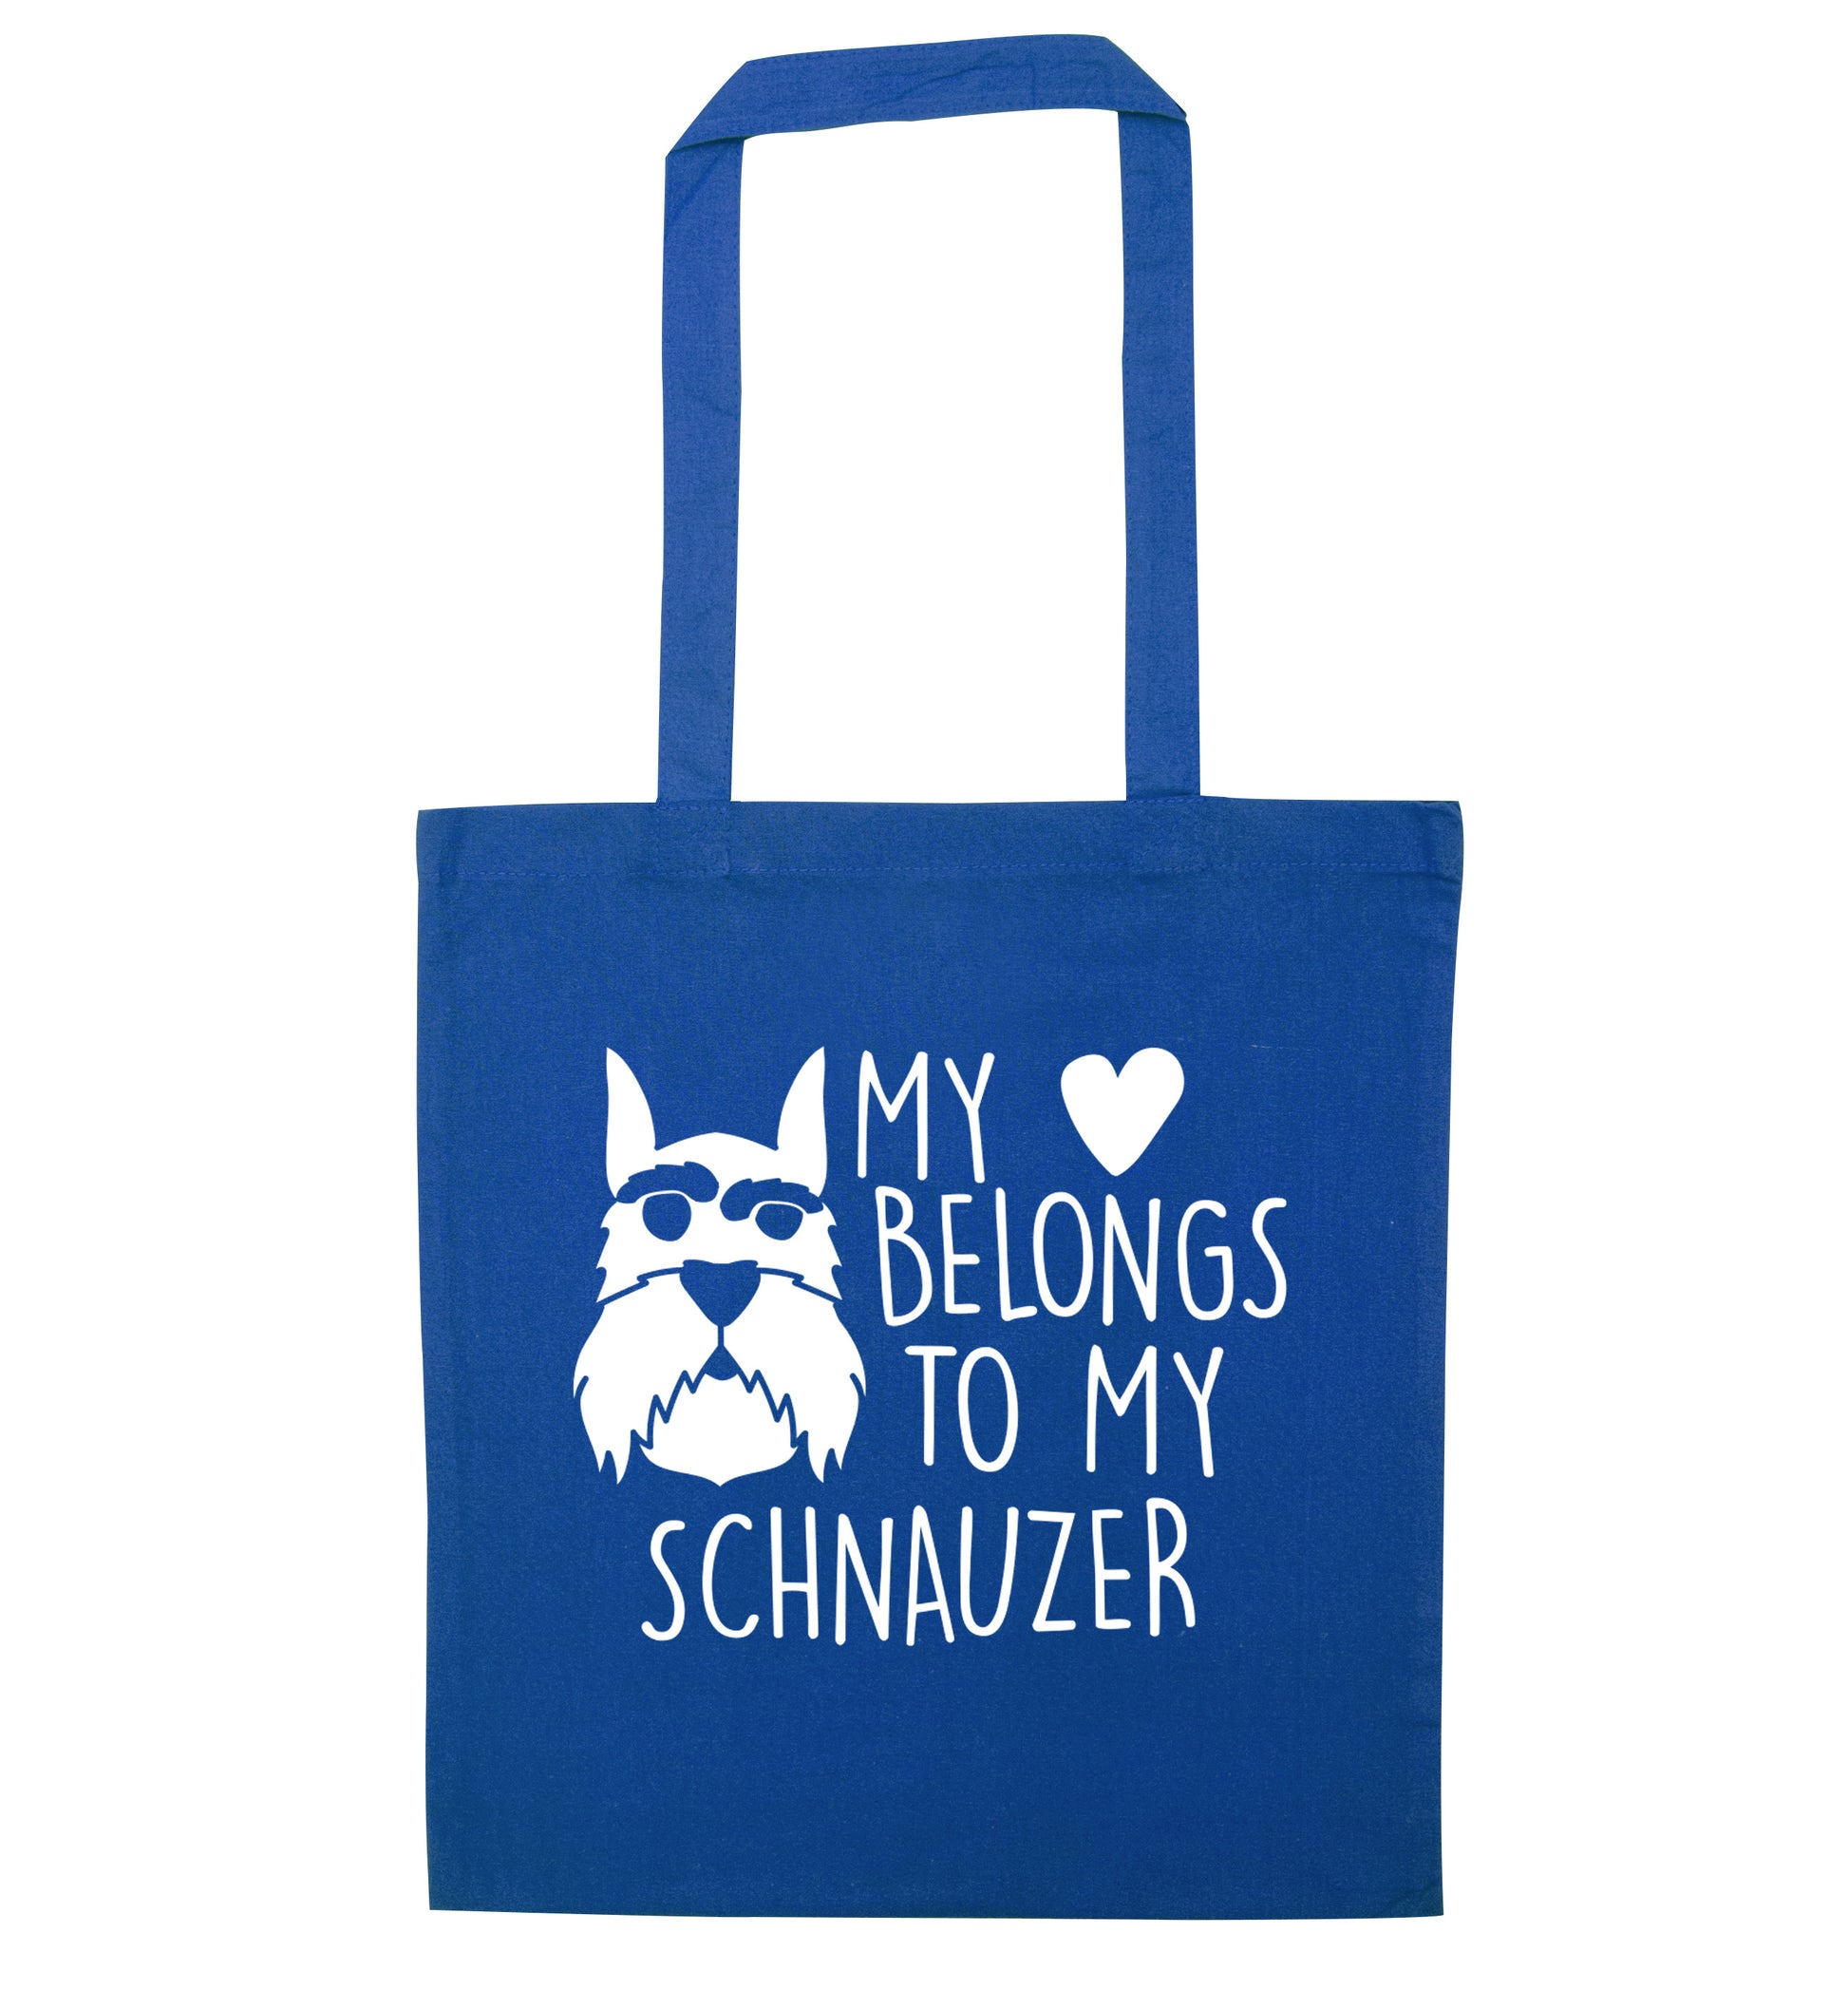 My heart belongs to my schnauzer blue tote bag